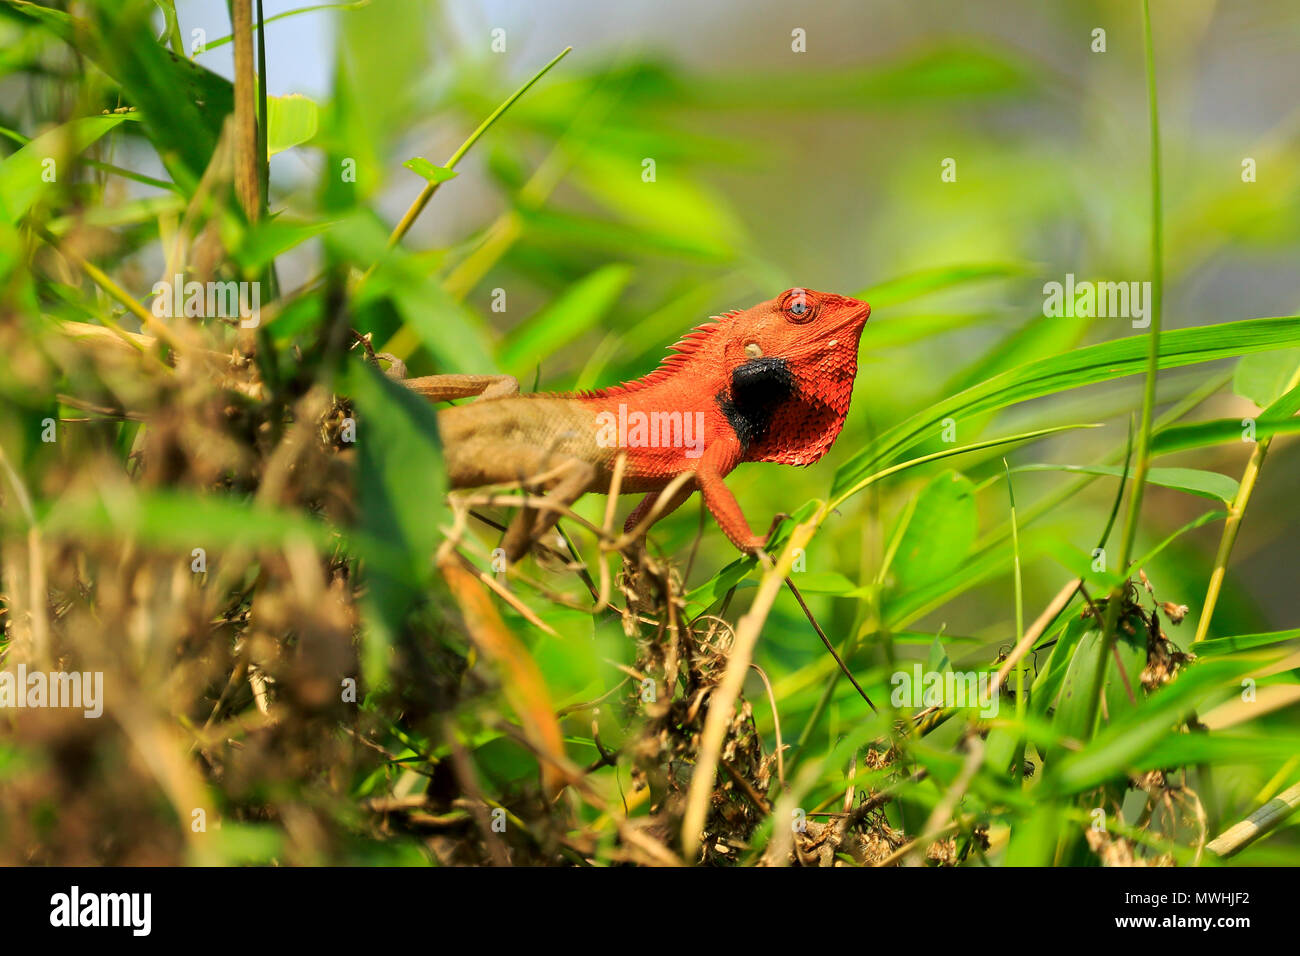 Common garden lizard, eastern garden lizard or changeable lizard (Calotes versicolor), Satchari National Park, Habiganj, Bangladesh Stock Photo